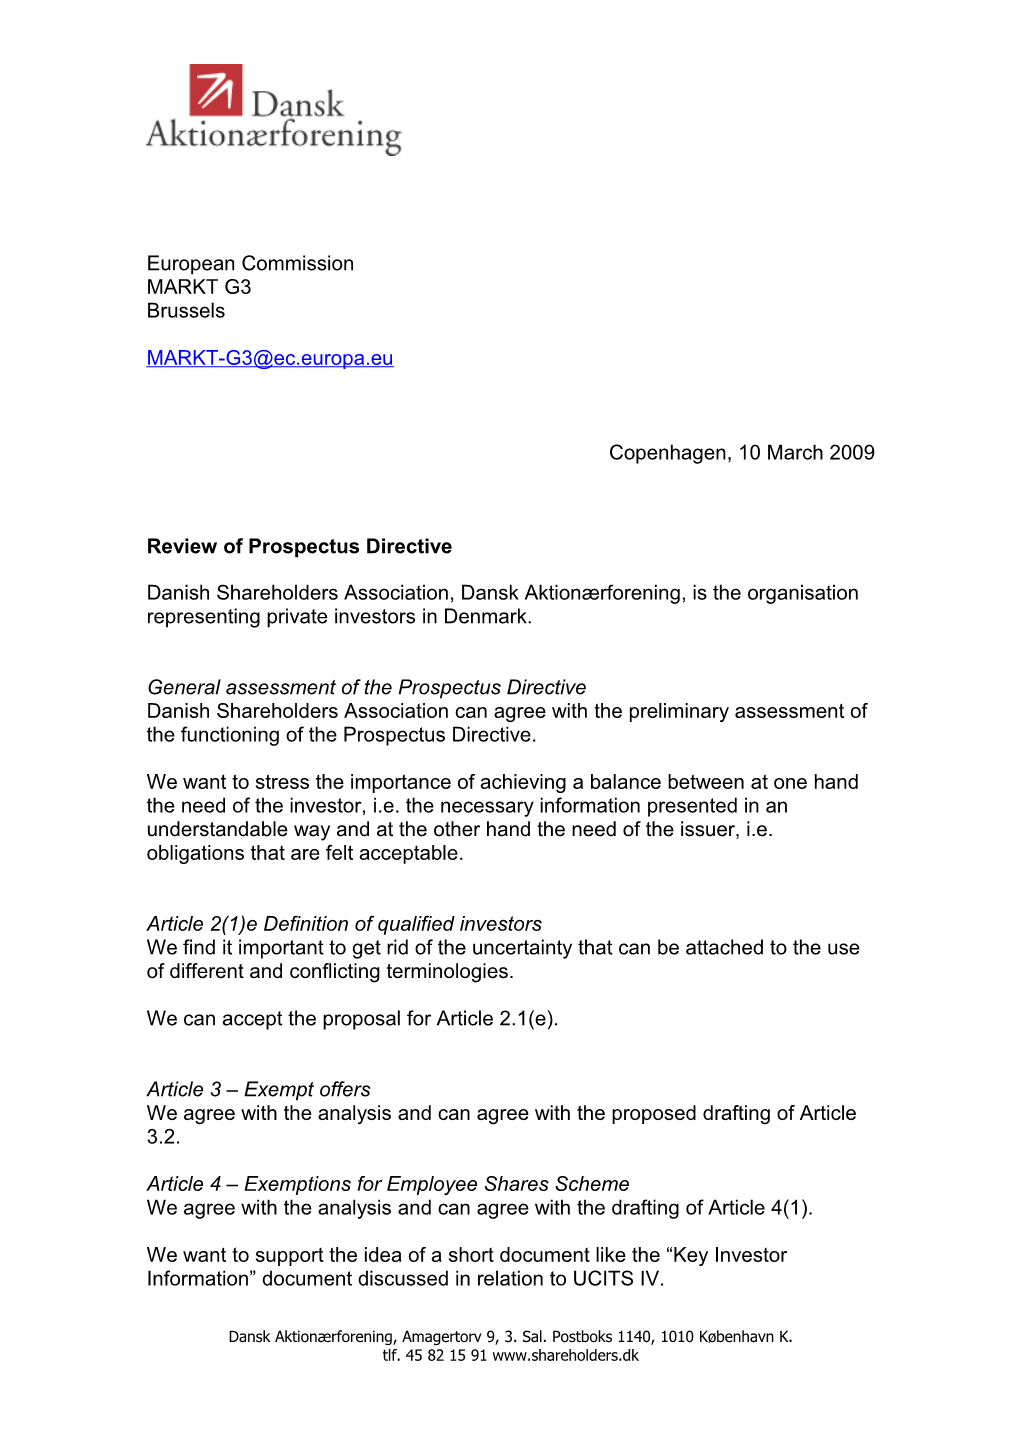 DAF on Prospectus Directive